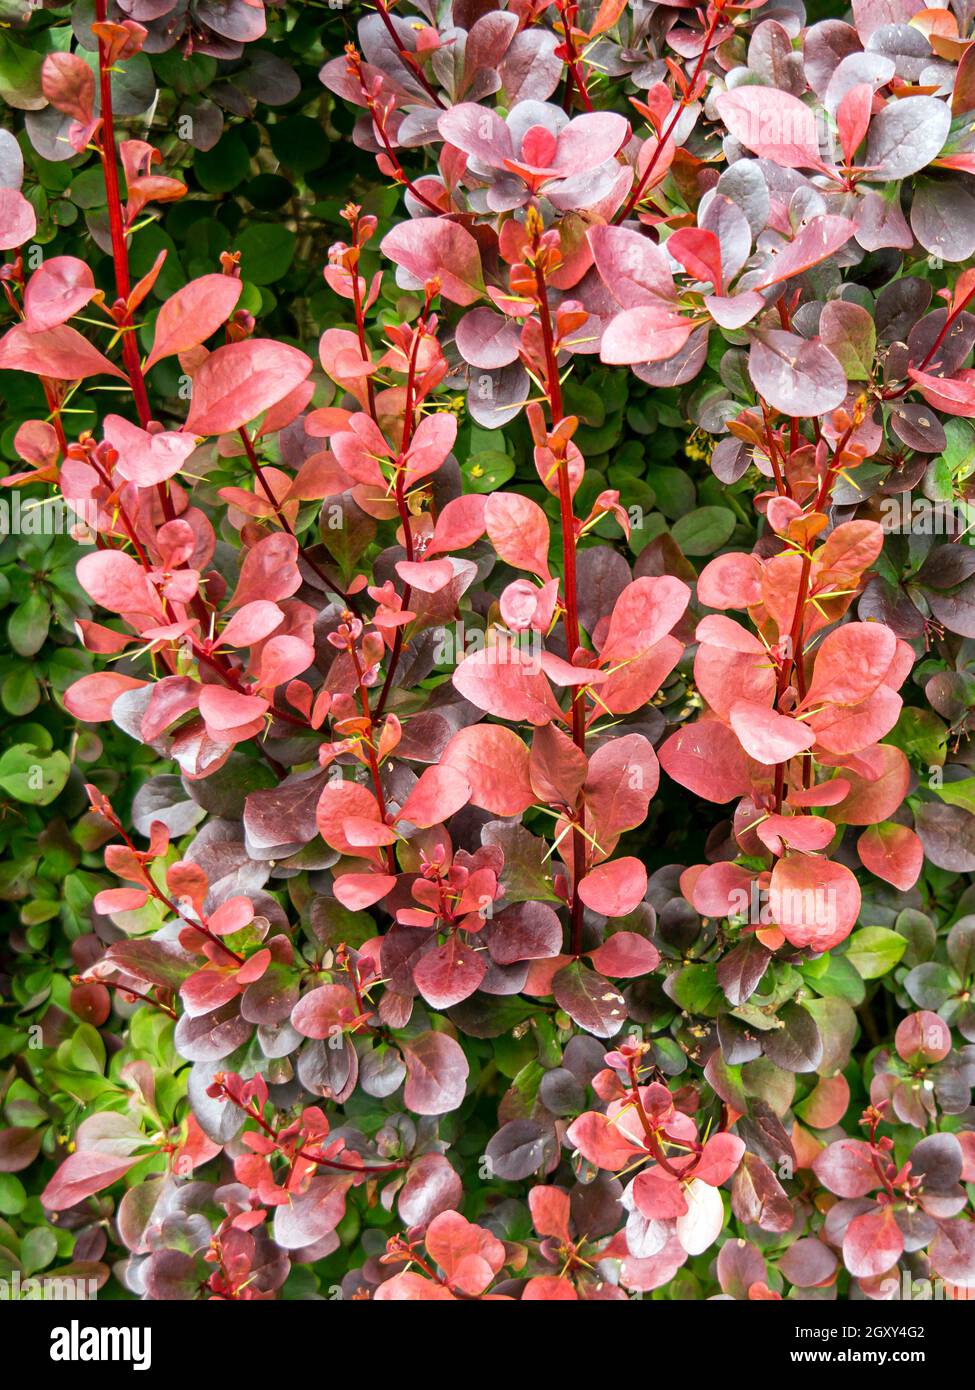 Closeup of beautiful bronze leaves on a Japanese barberry shrub, Berberis thunbergii, in a garden Stock Photo